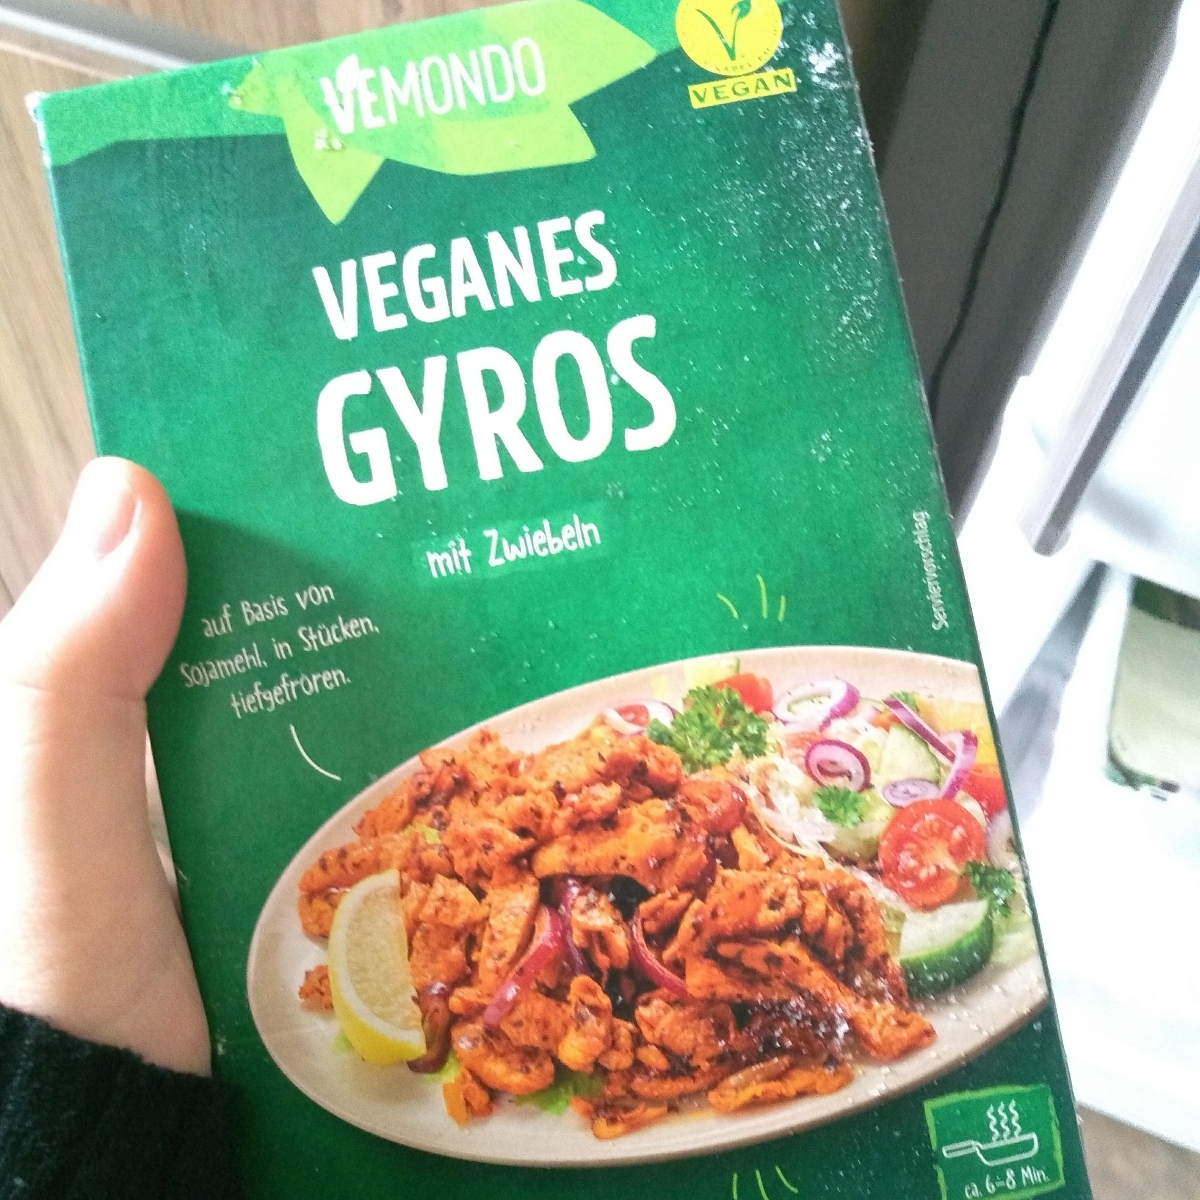 Vemondo Veganes gyros Review | abillion